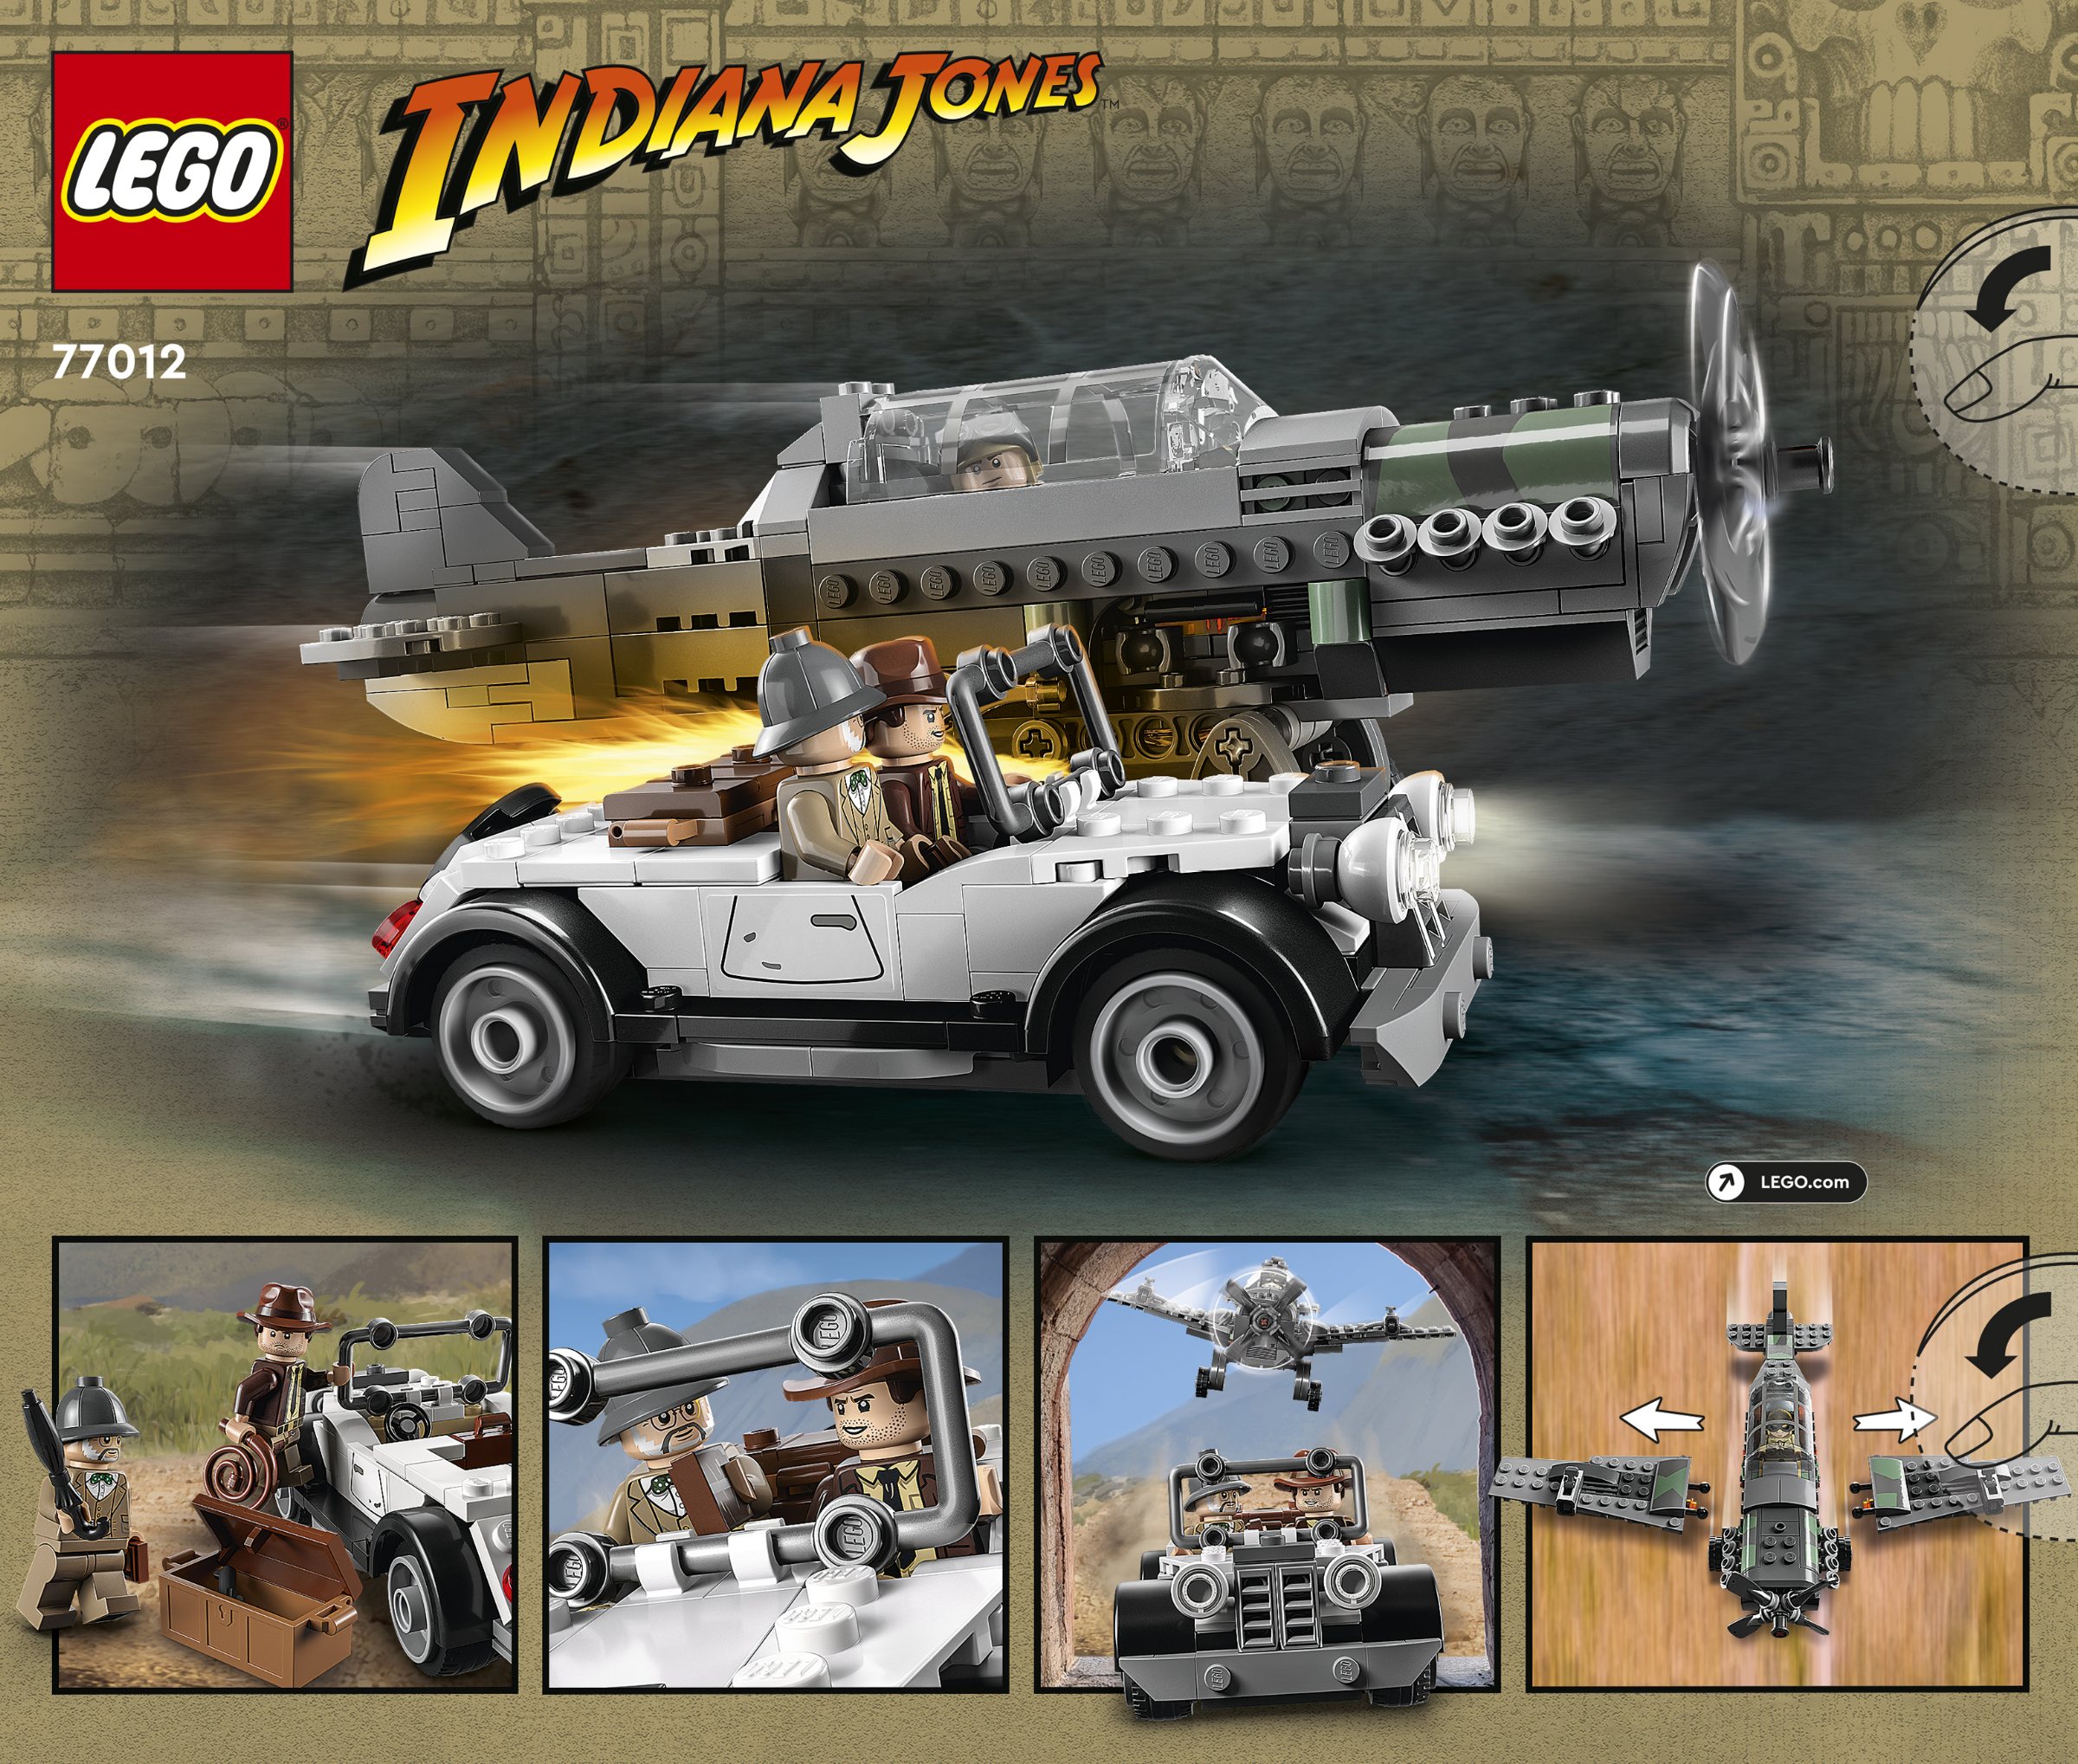 LEGO Indiana Jones Motorcycle Chase Set 7620 - US